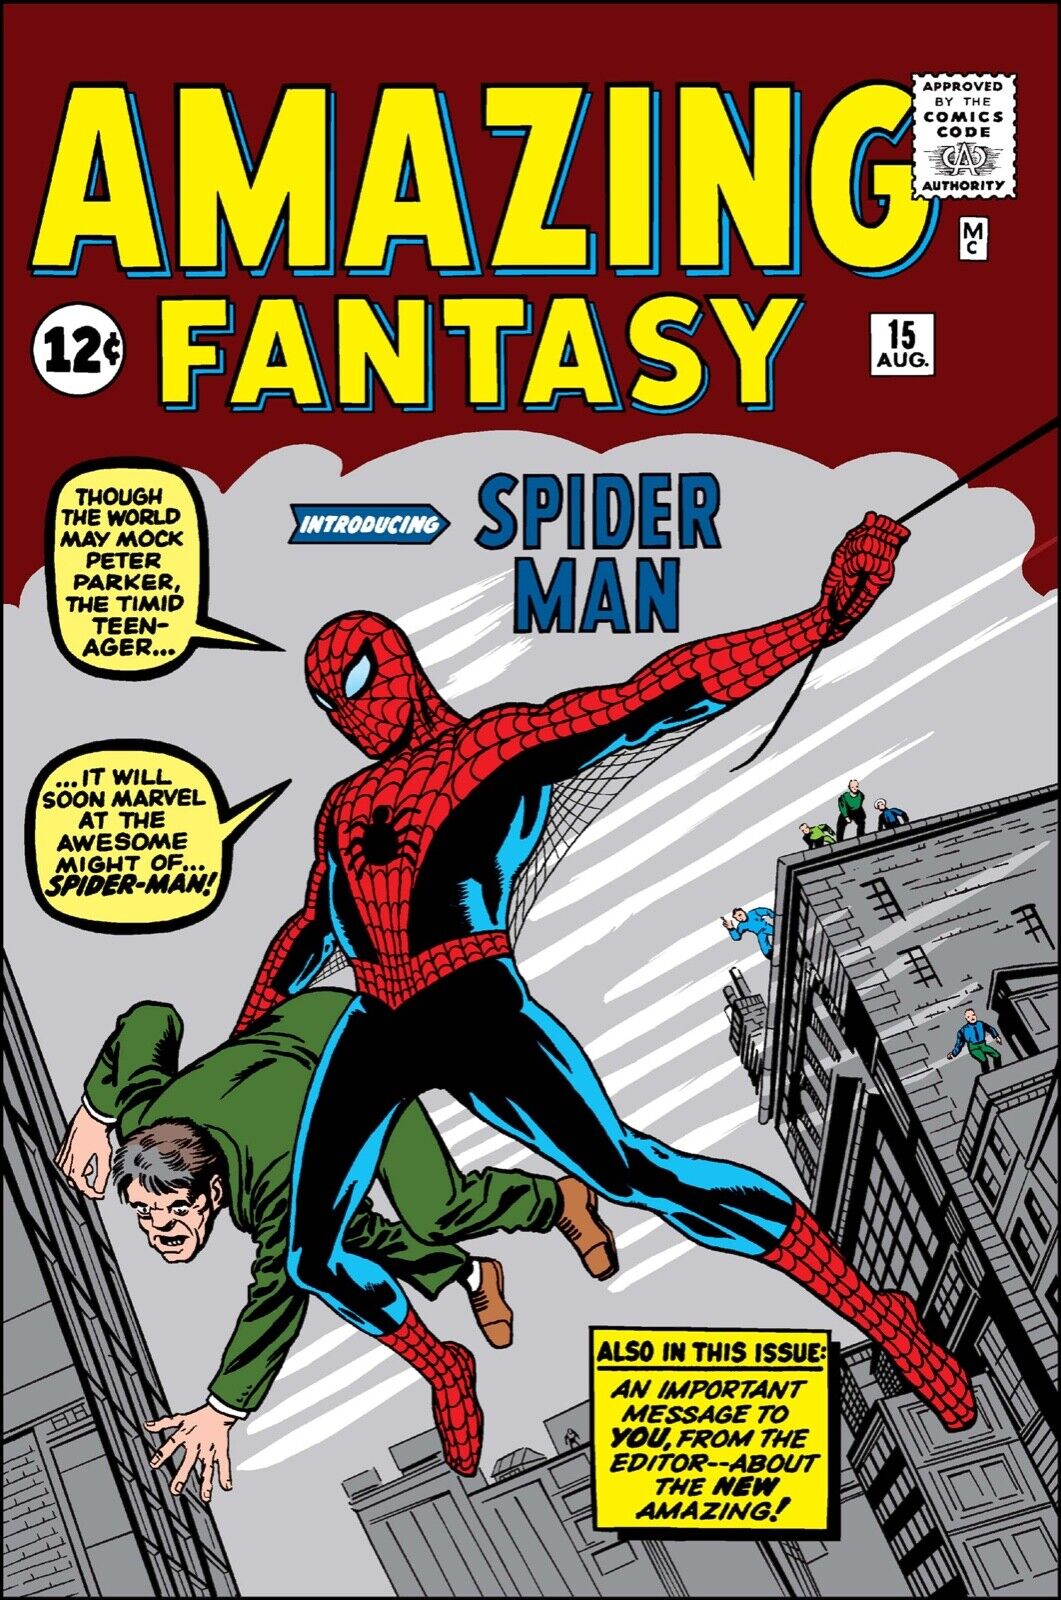 13x19 Amazing Fantasy #15 Comic Cover Replica Poster Print Marvel Spiderman  679